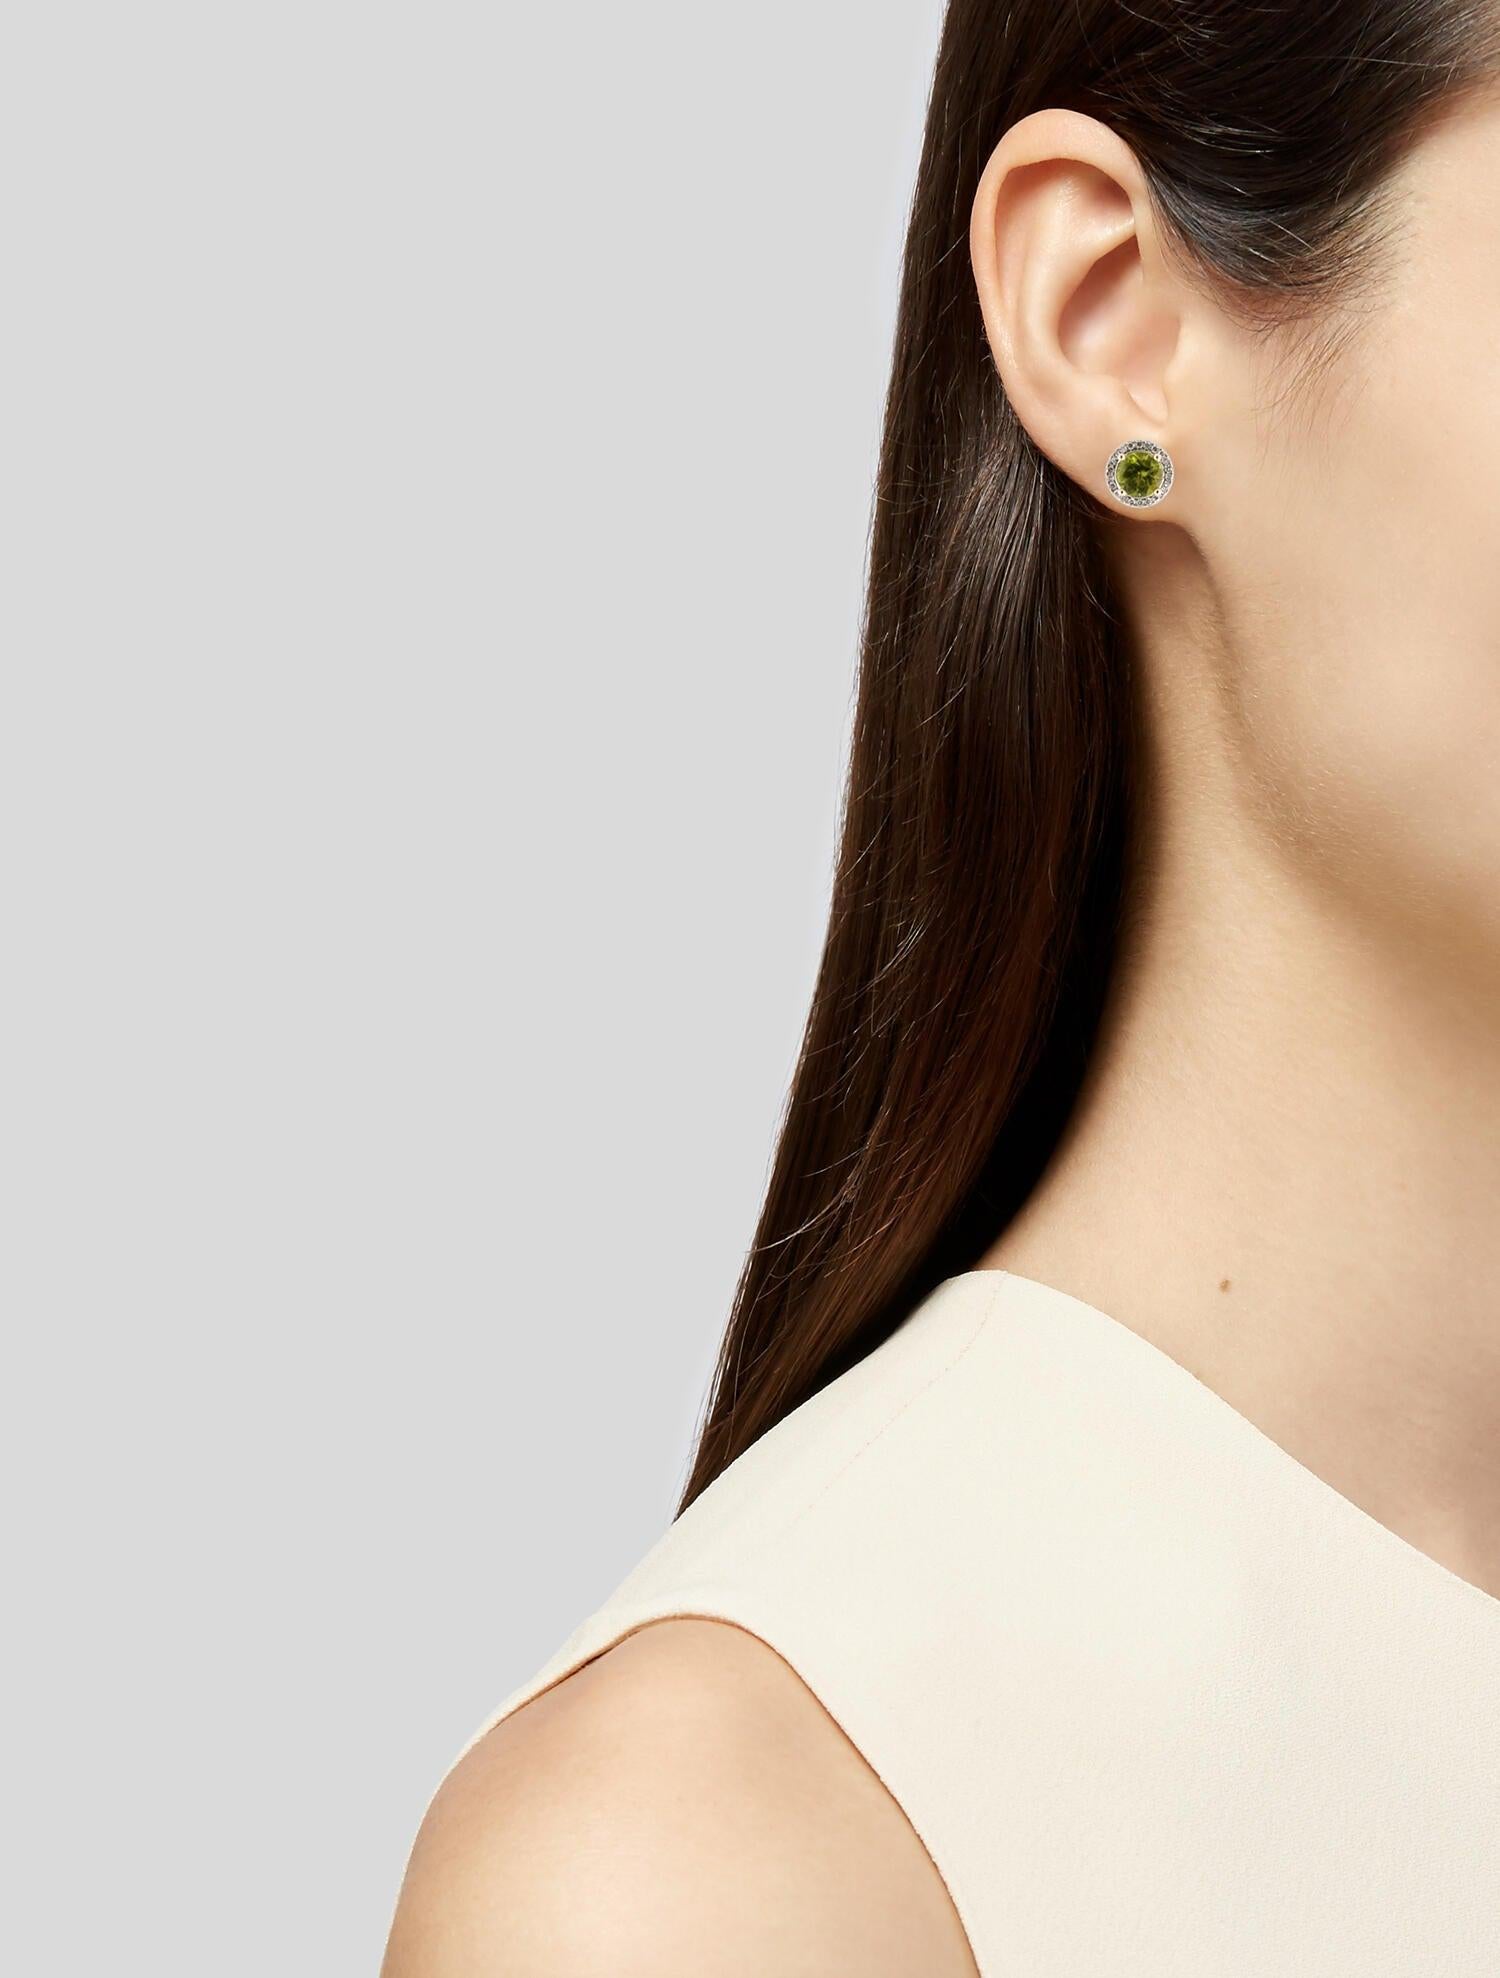 Exquisite 14K 2.70ctw Peridot & Diamond Halo Stud Earrings - Gemstone Elegance For Sale 1